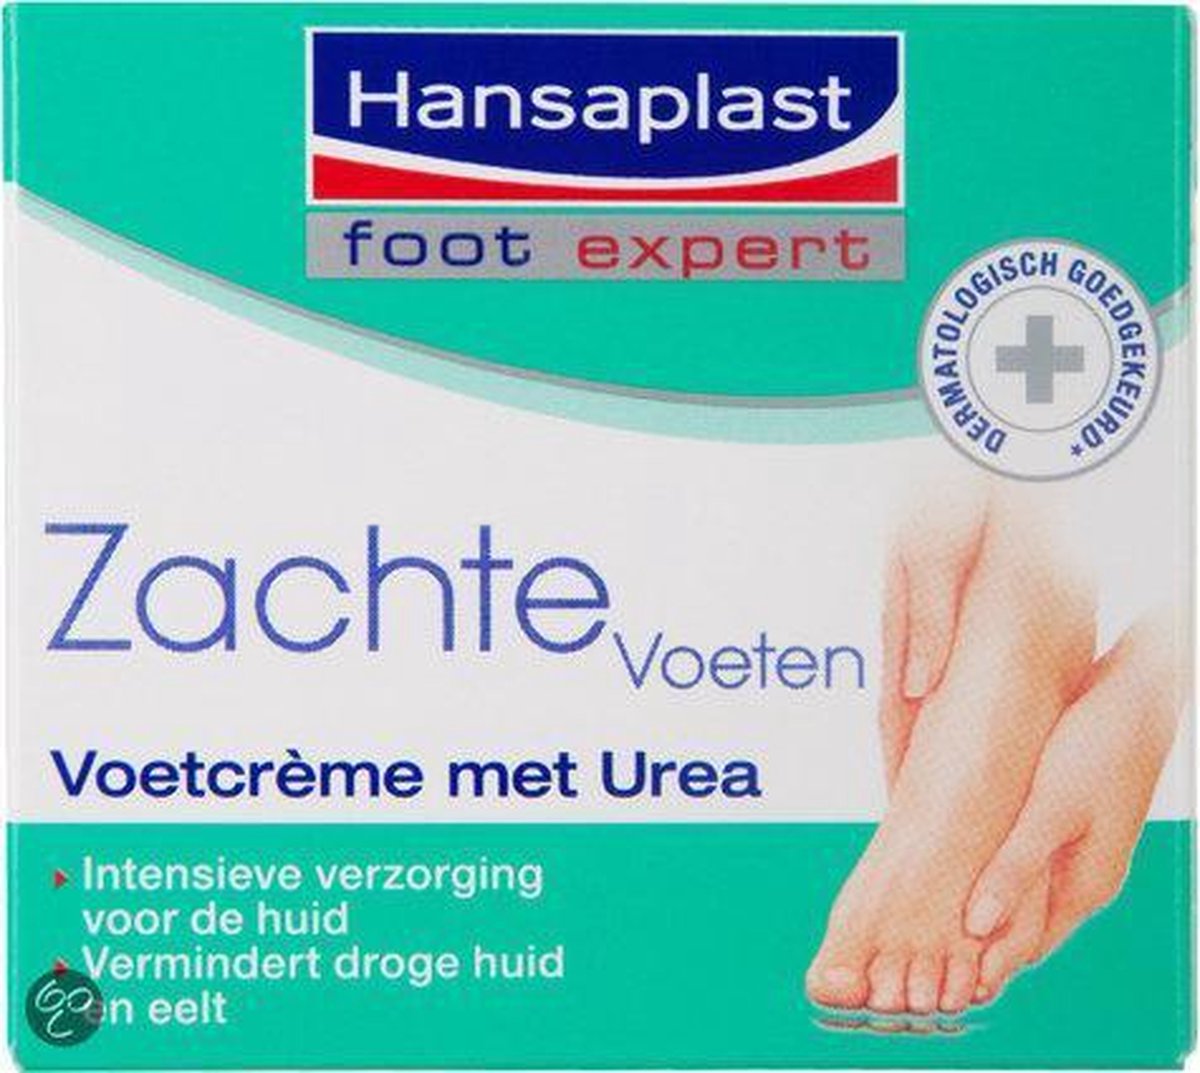 Giftig Doorzichtig zacht Hansaplast Zachte Voeten - Herstellende voetcrème 75ml | bol.com